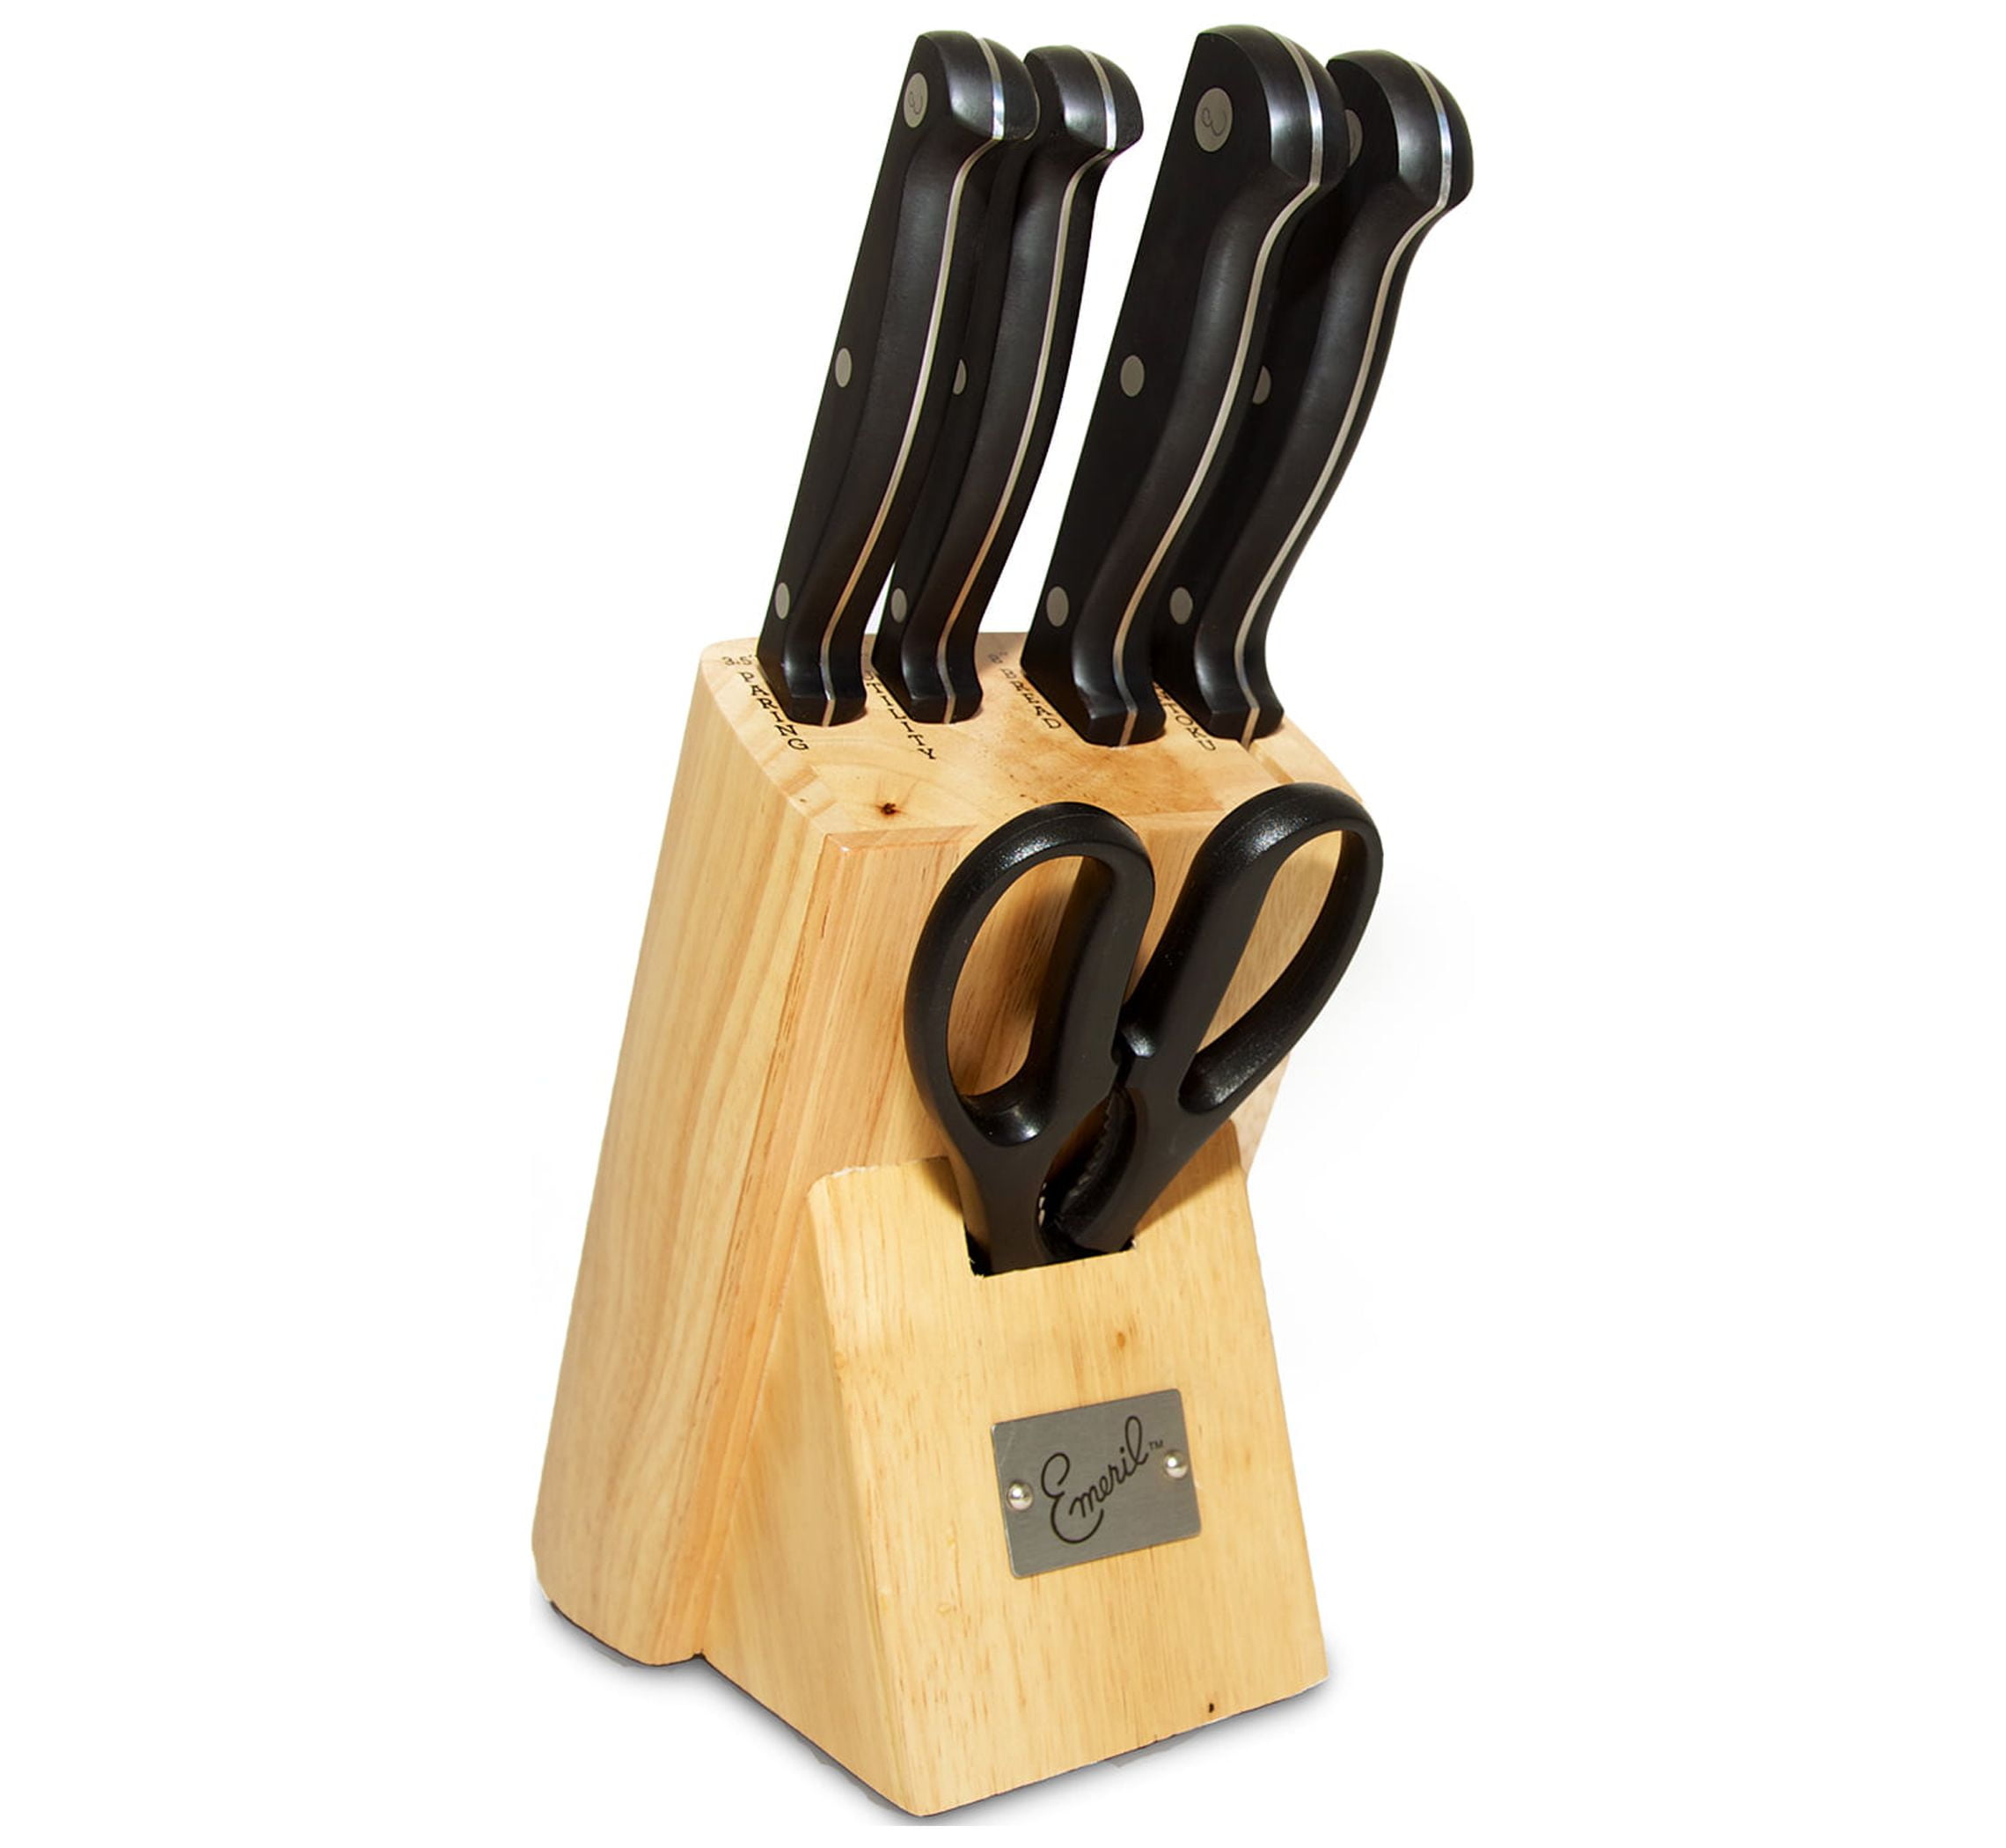 Emeril Lagasse Stainless Steel 6-Piece Kitchen Knife Block Set